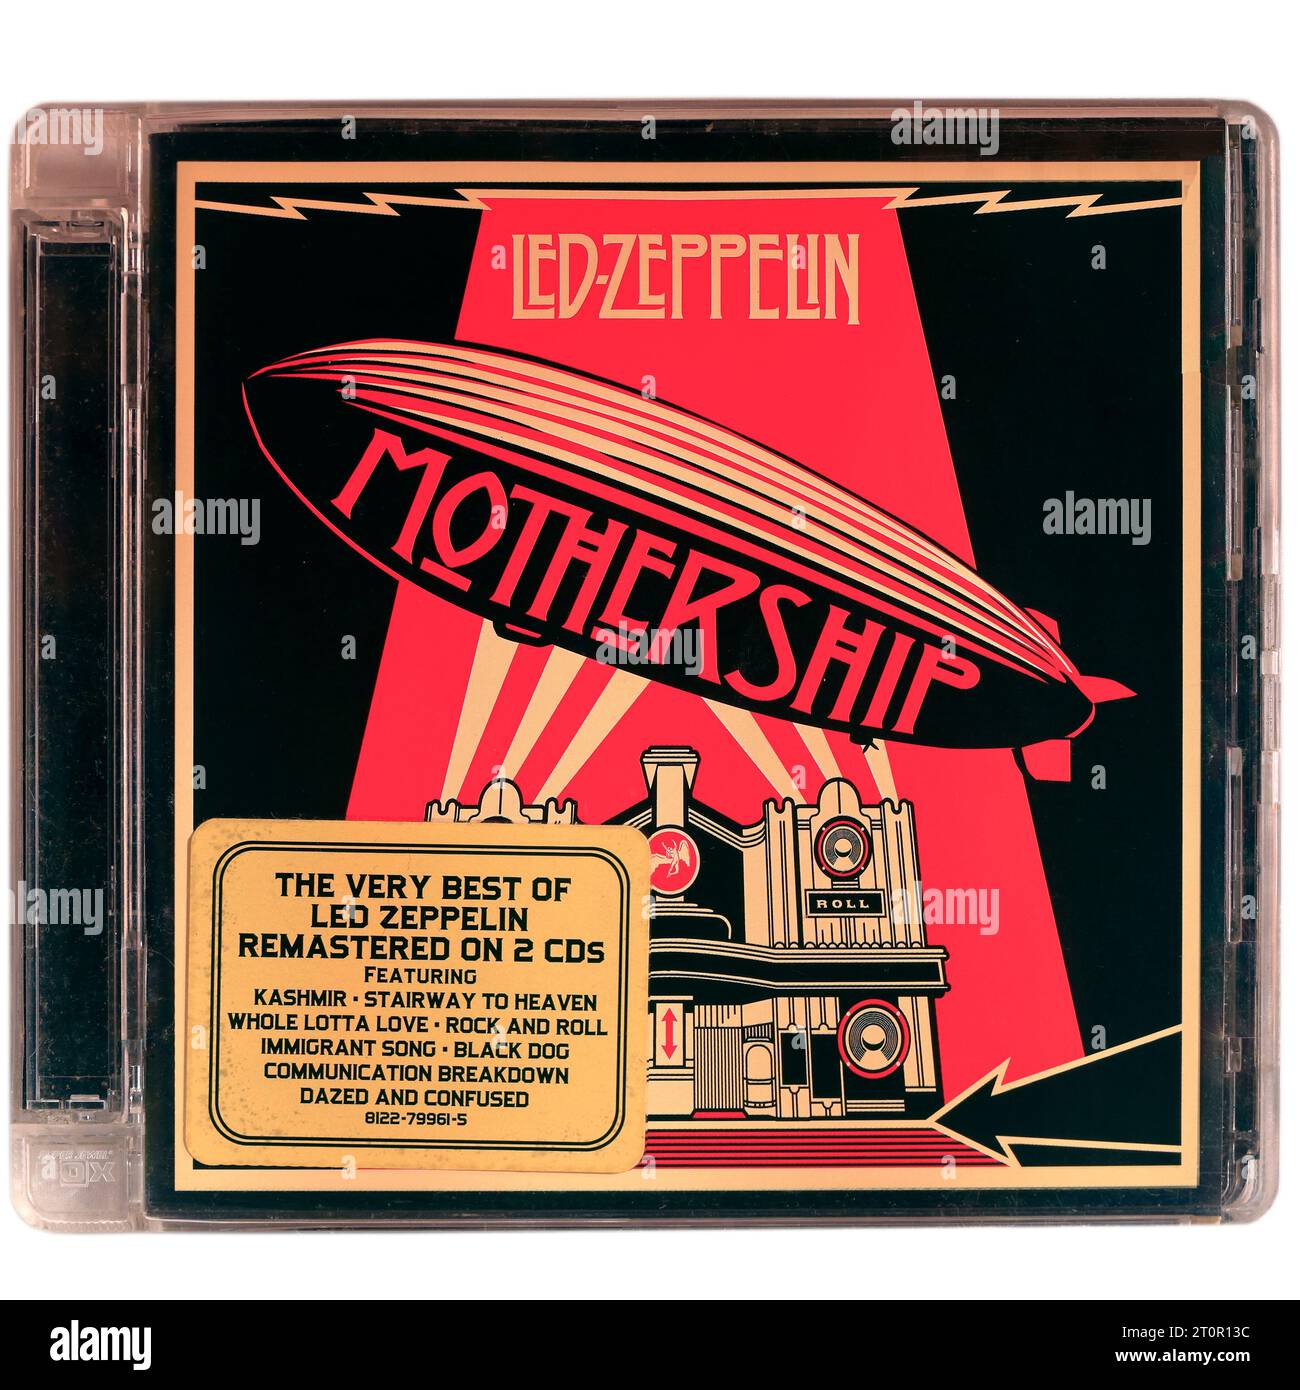 Led Zeppelin - Mothership CD case on light background. Stock Photo